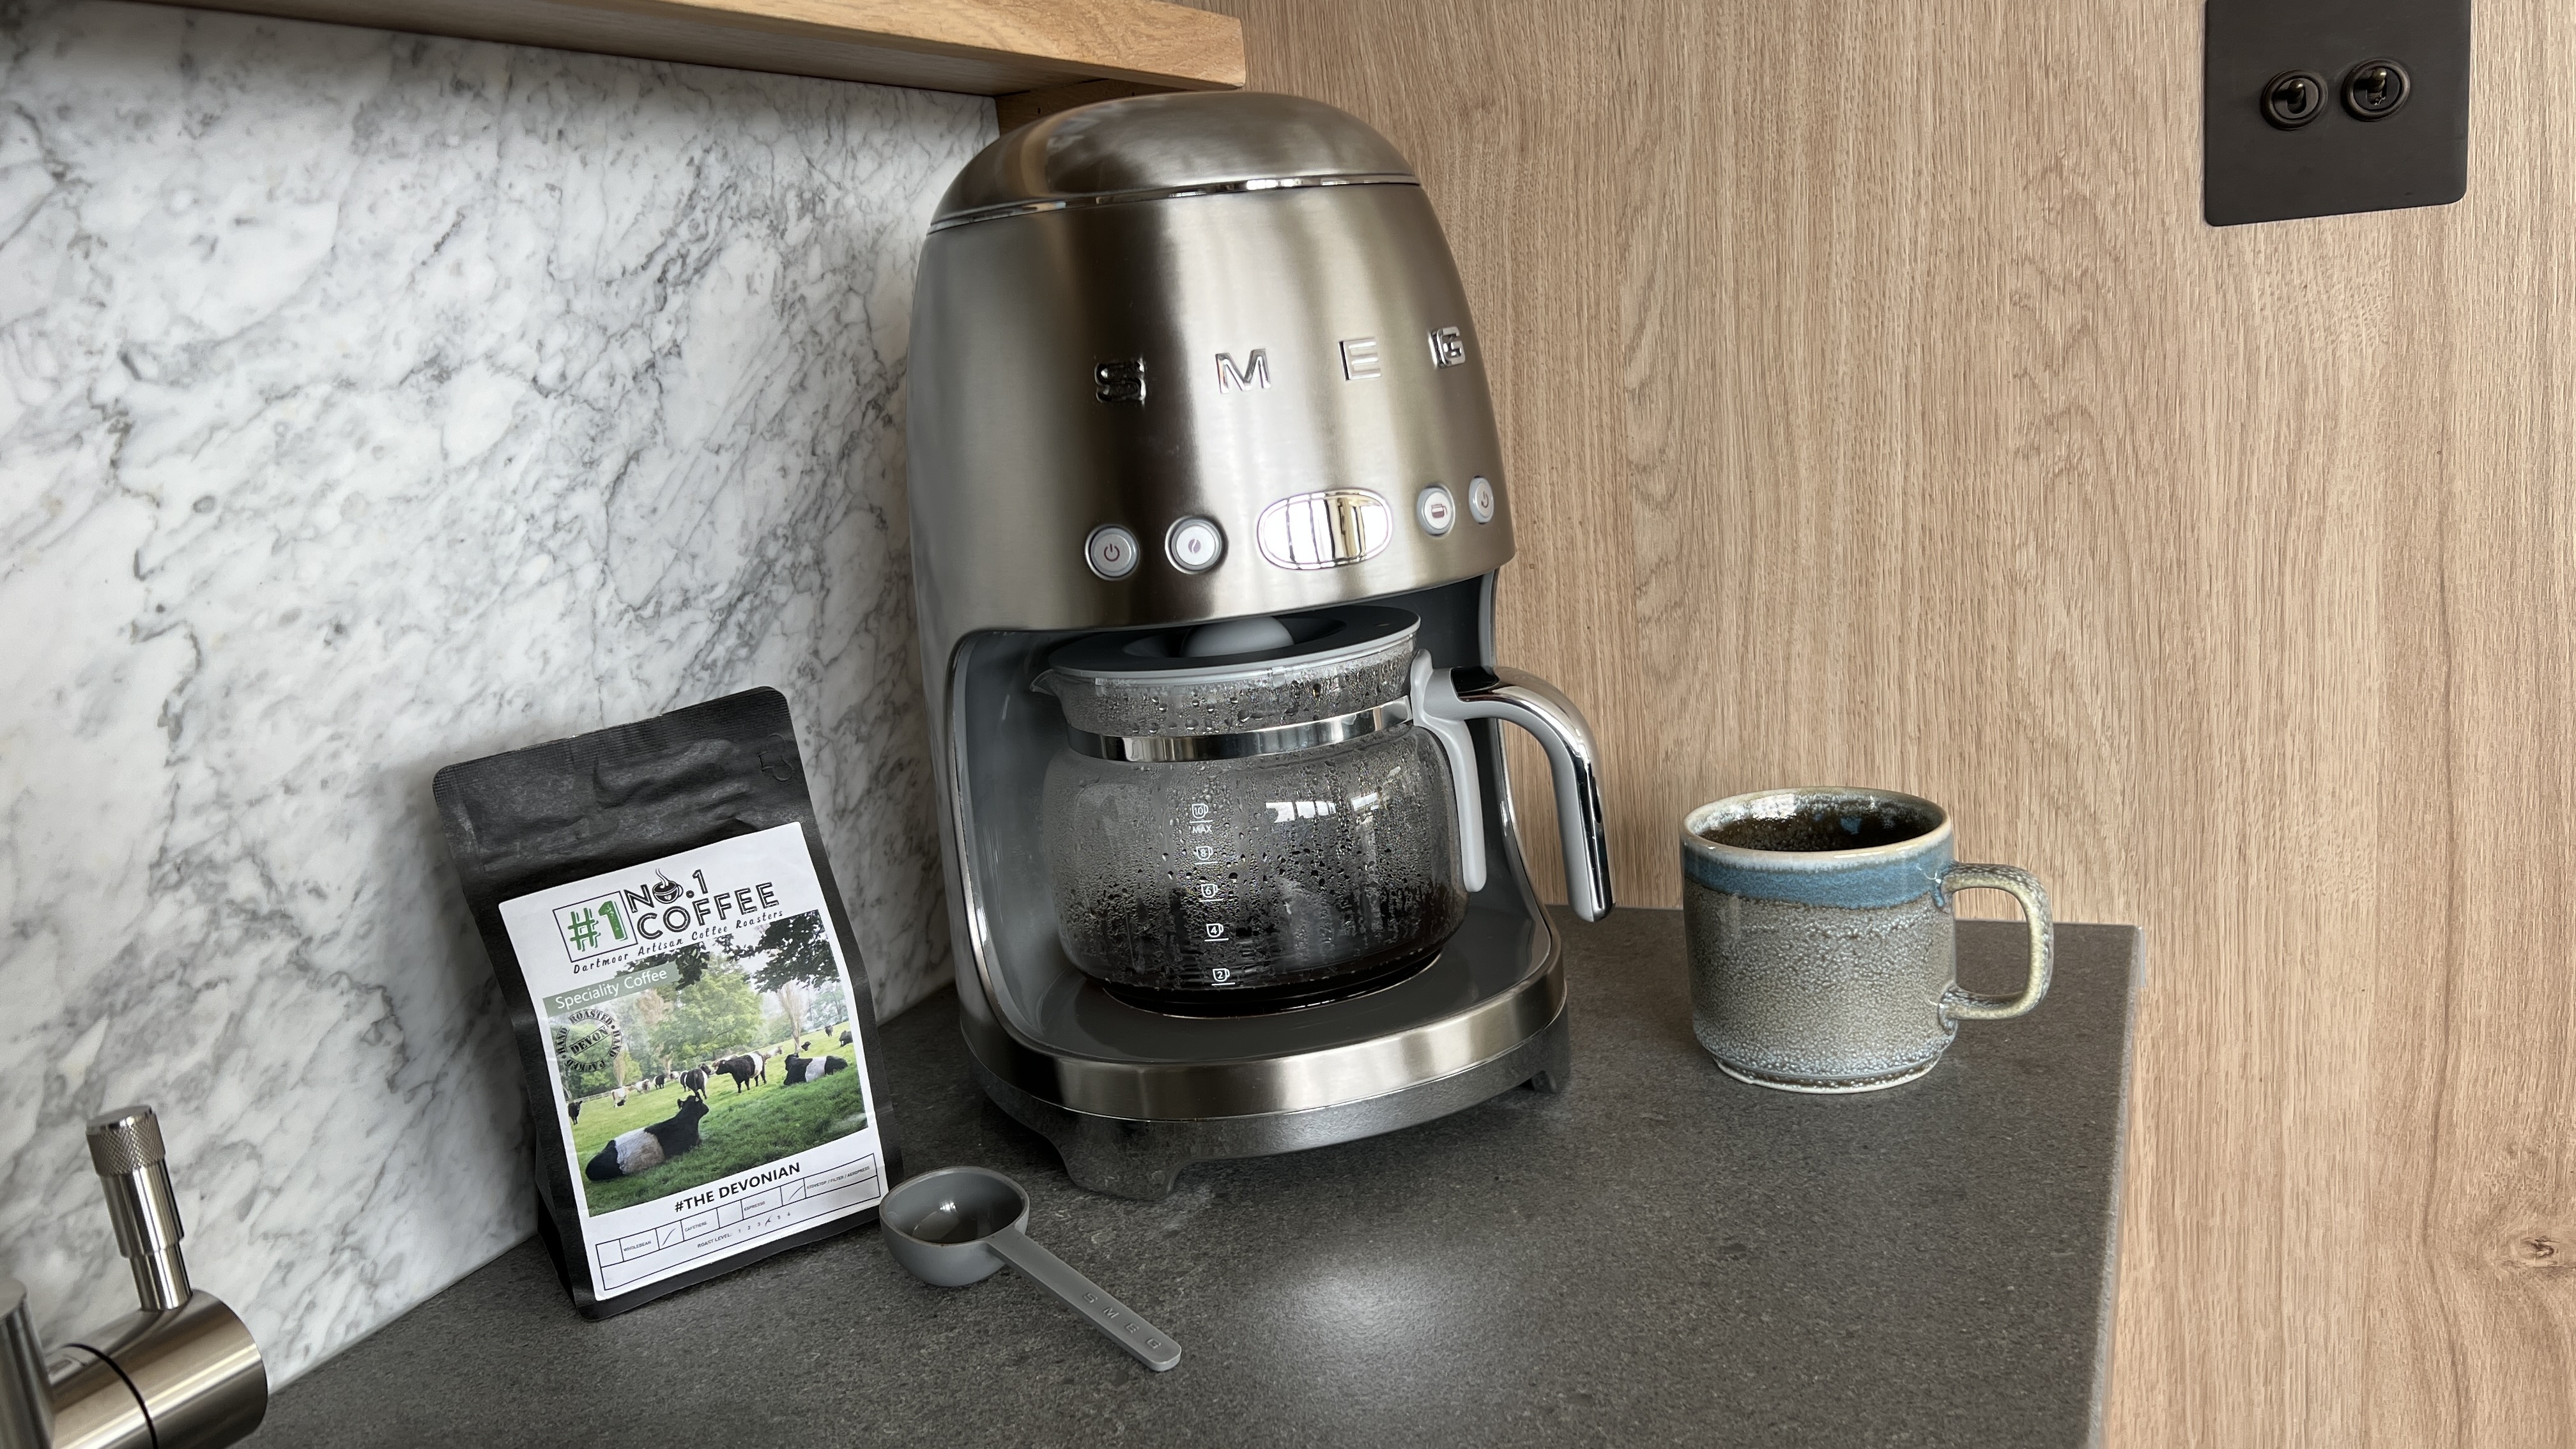 Smeg coffee machine with coffee and mug